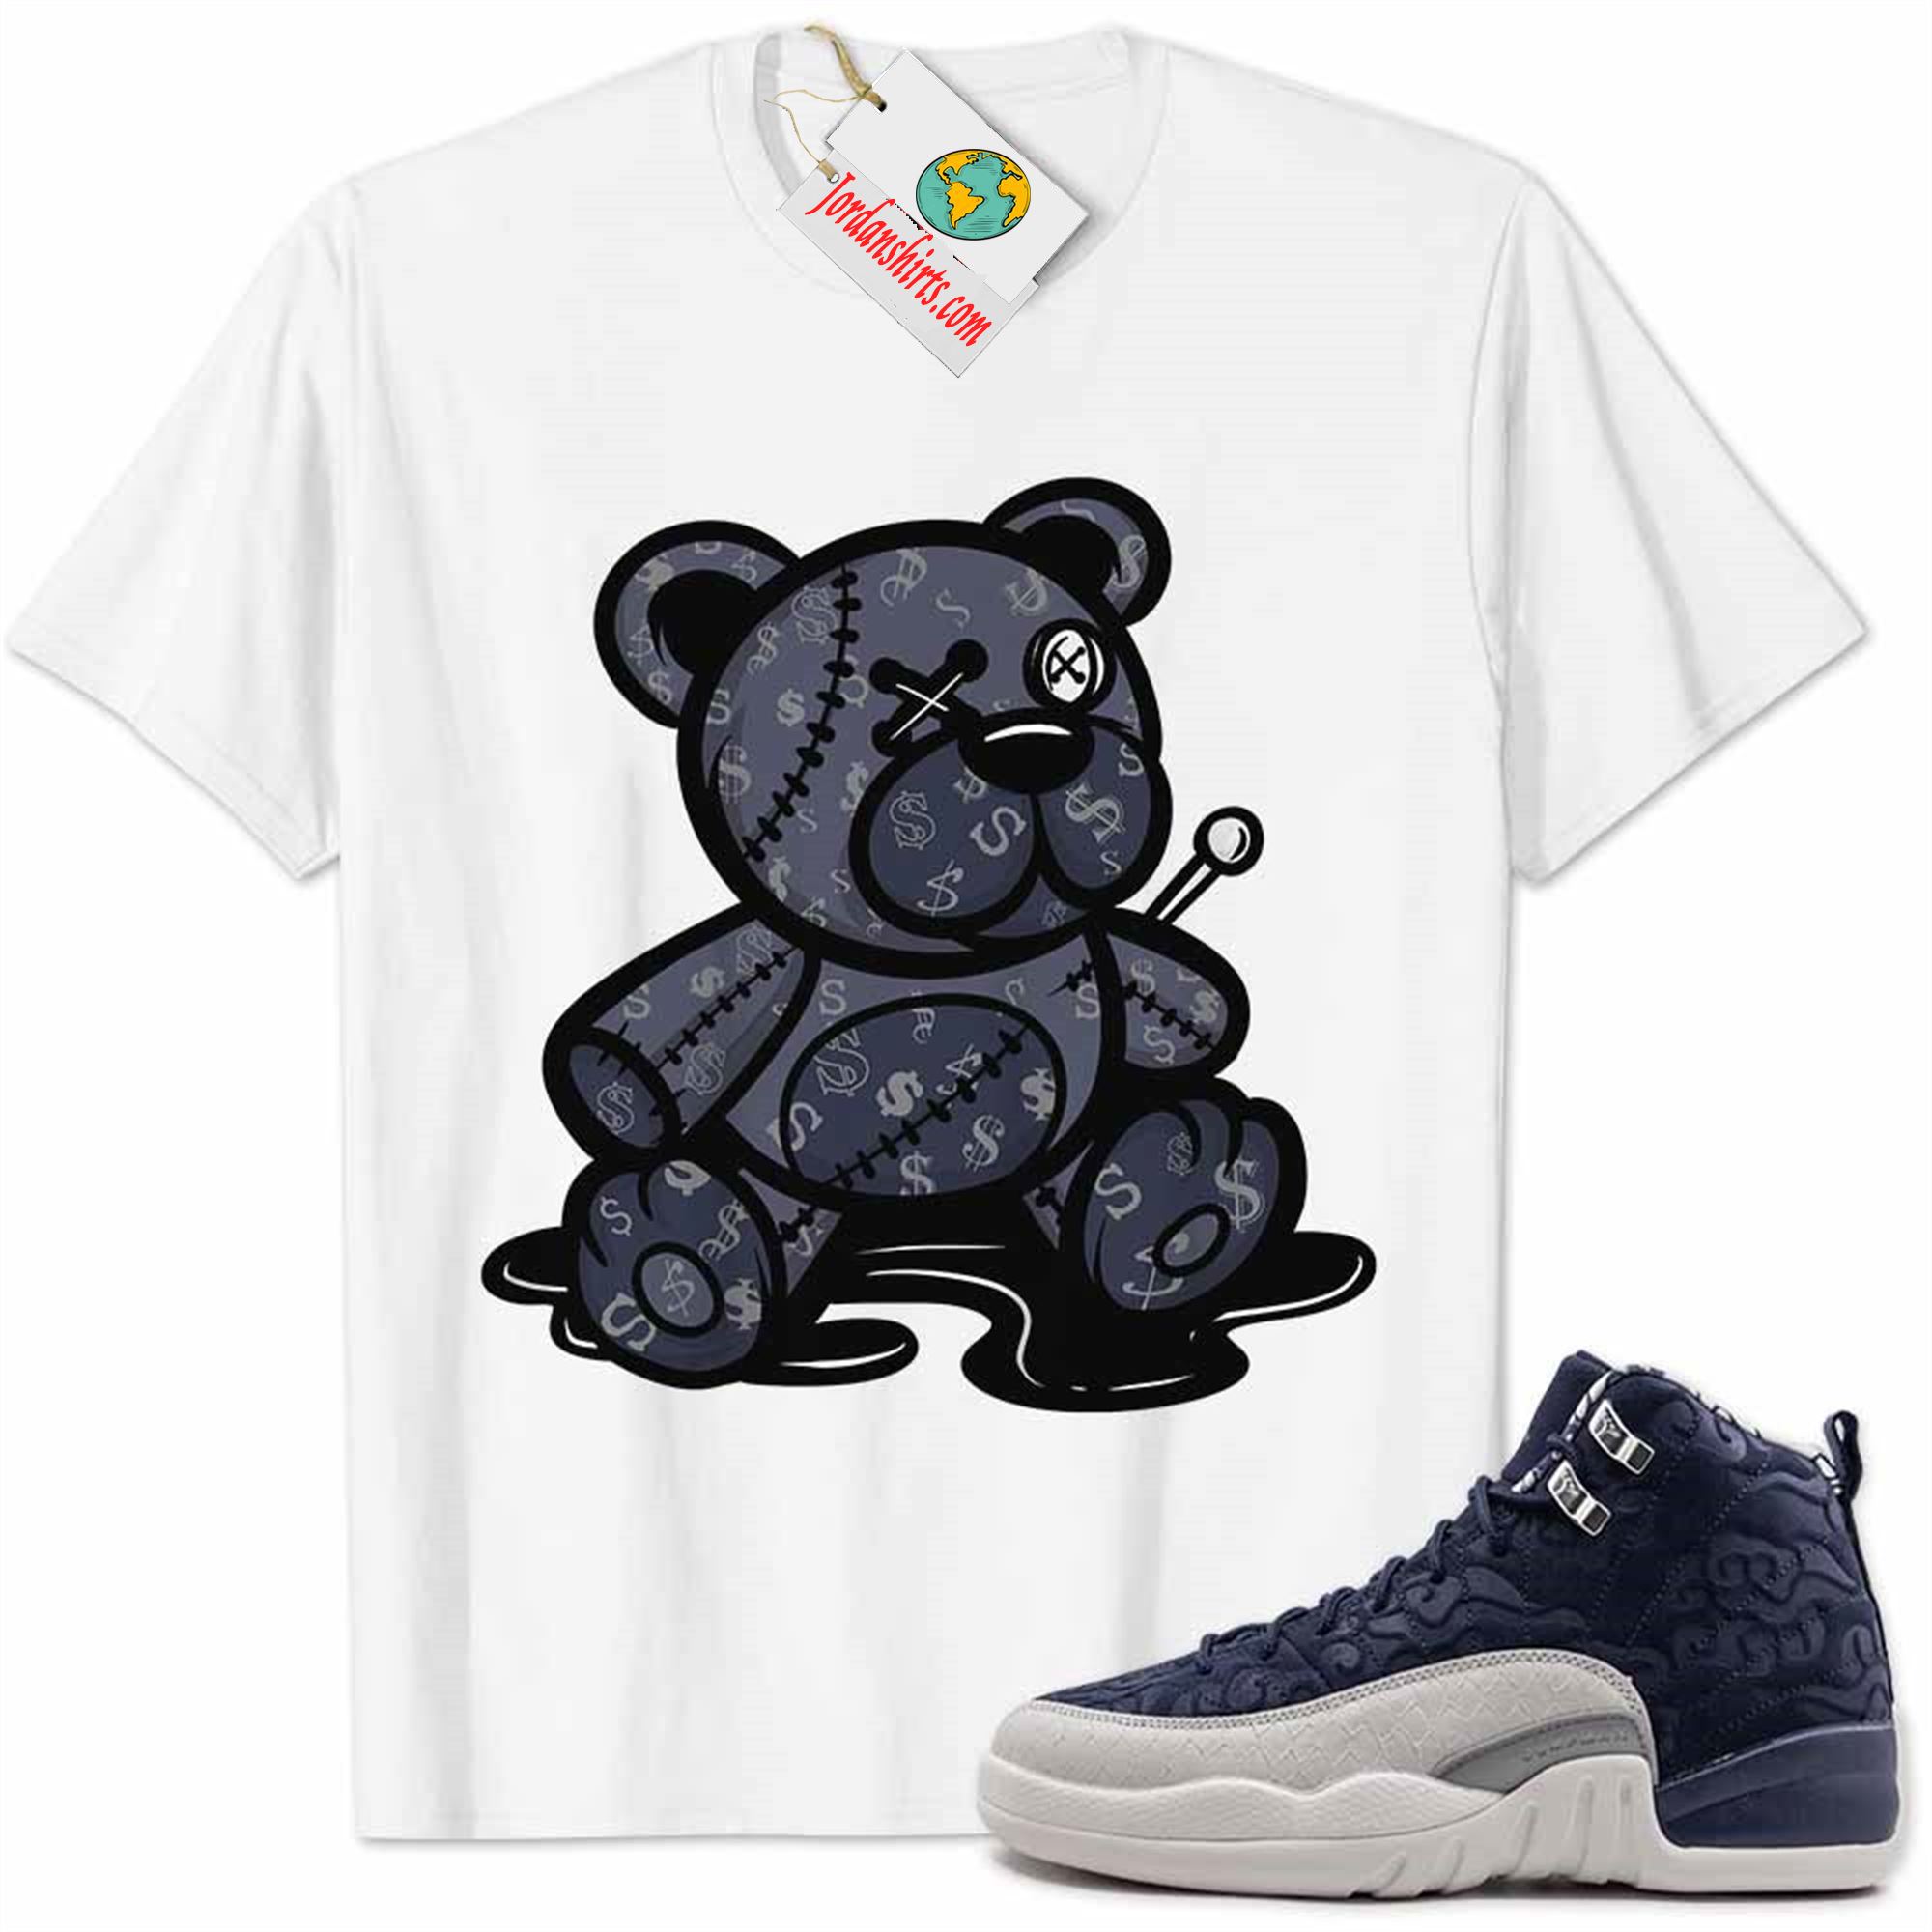 Jordan 12 Shirt, Jordan 12 International Flight Shirt Teddy Bear All Money In White Full Size Up To 5xl